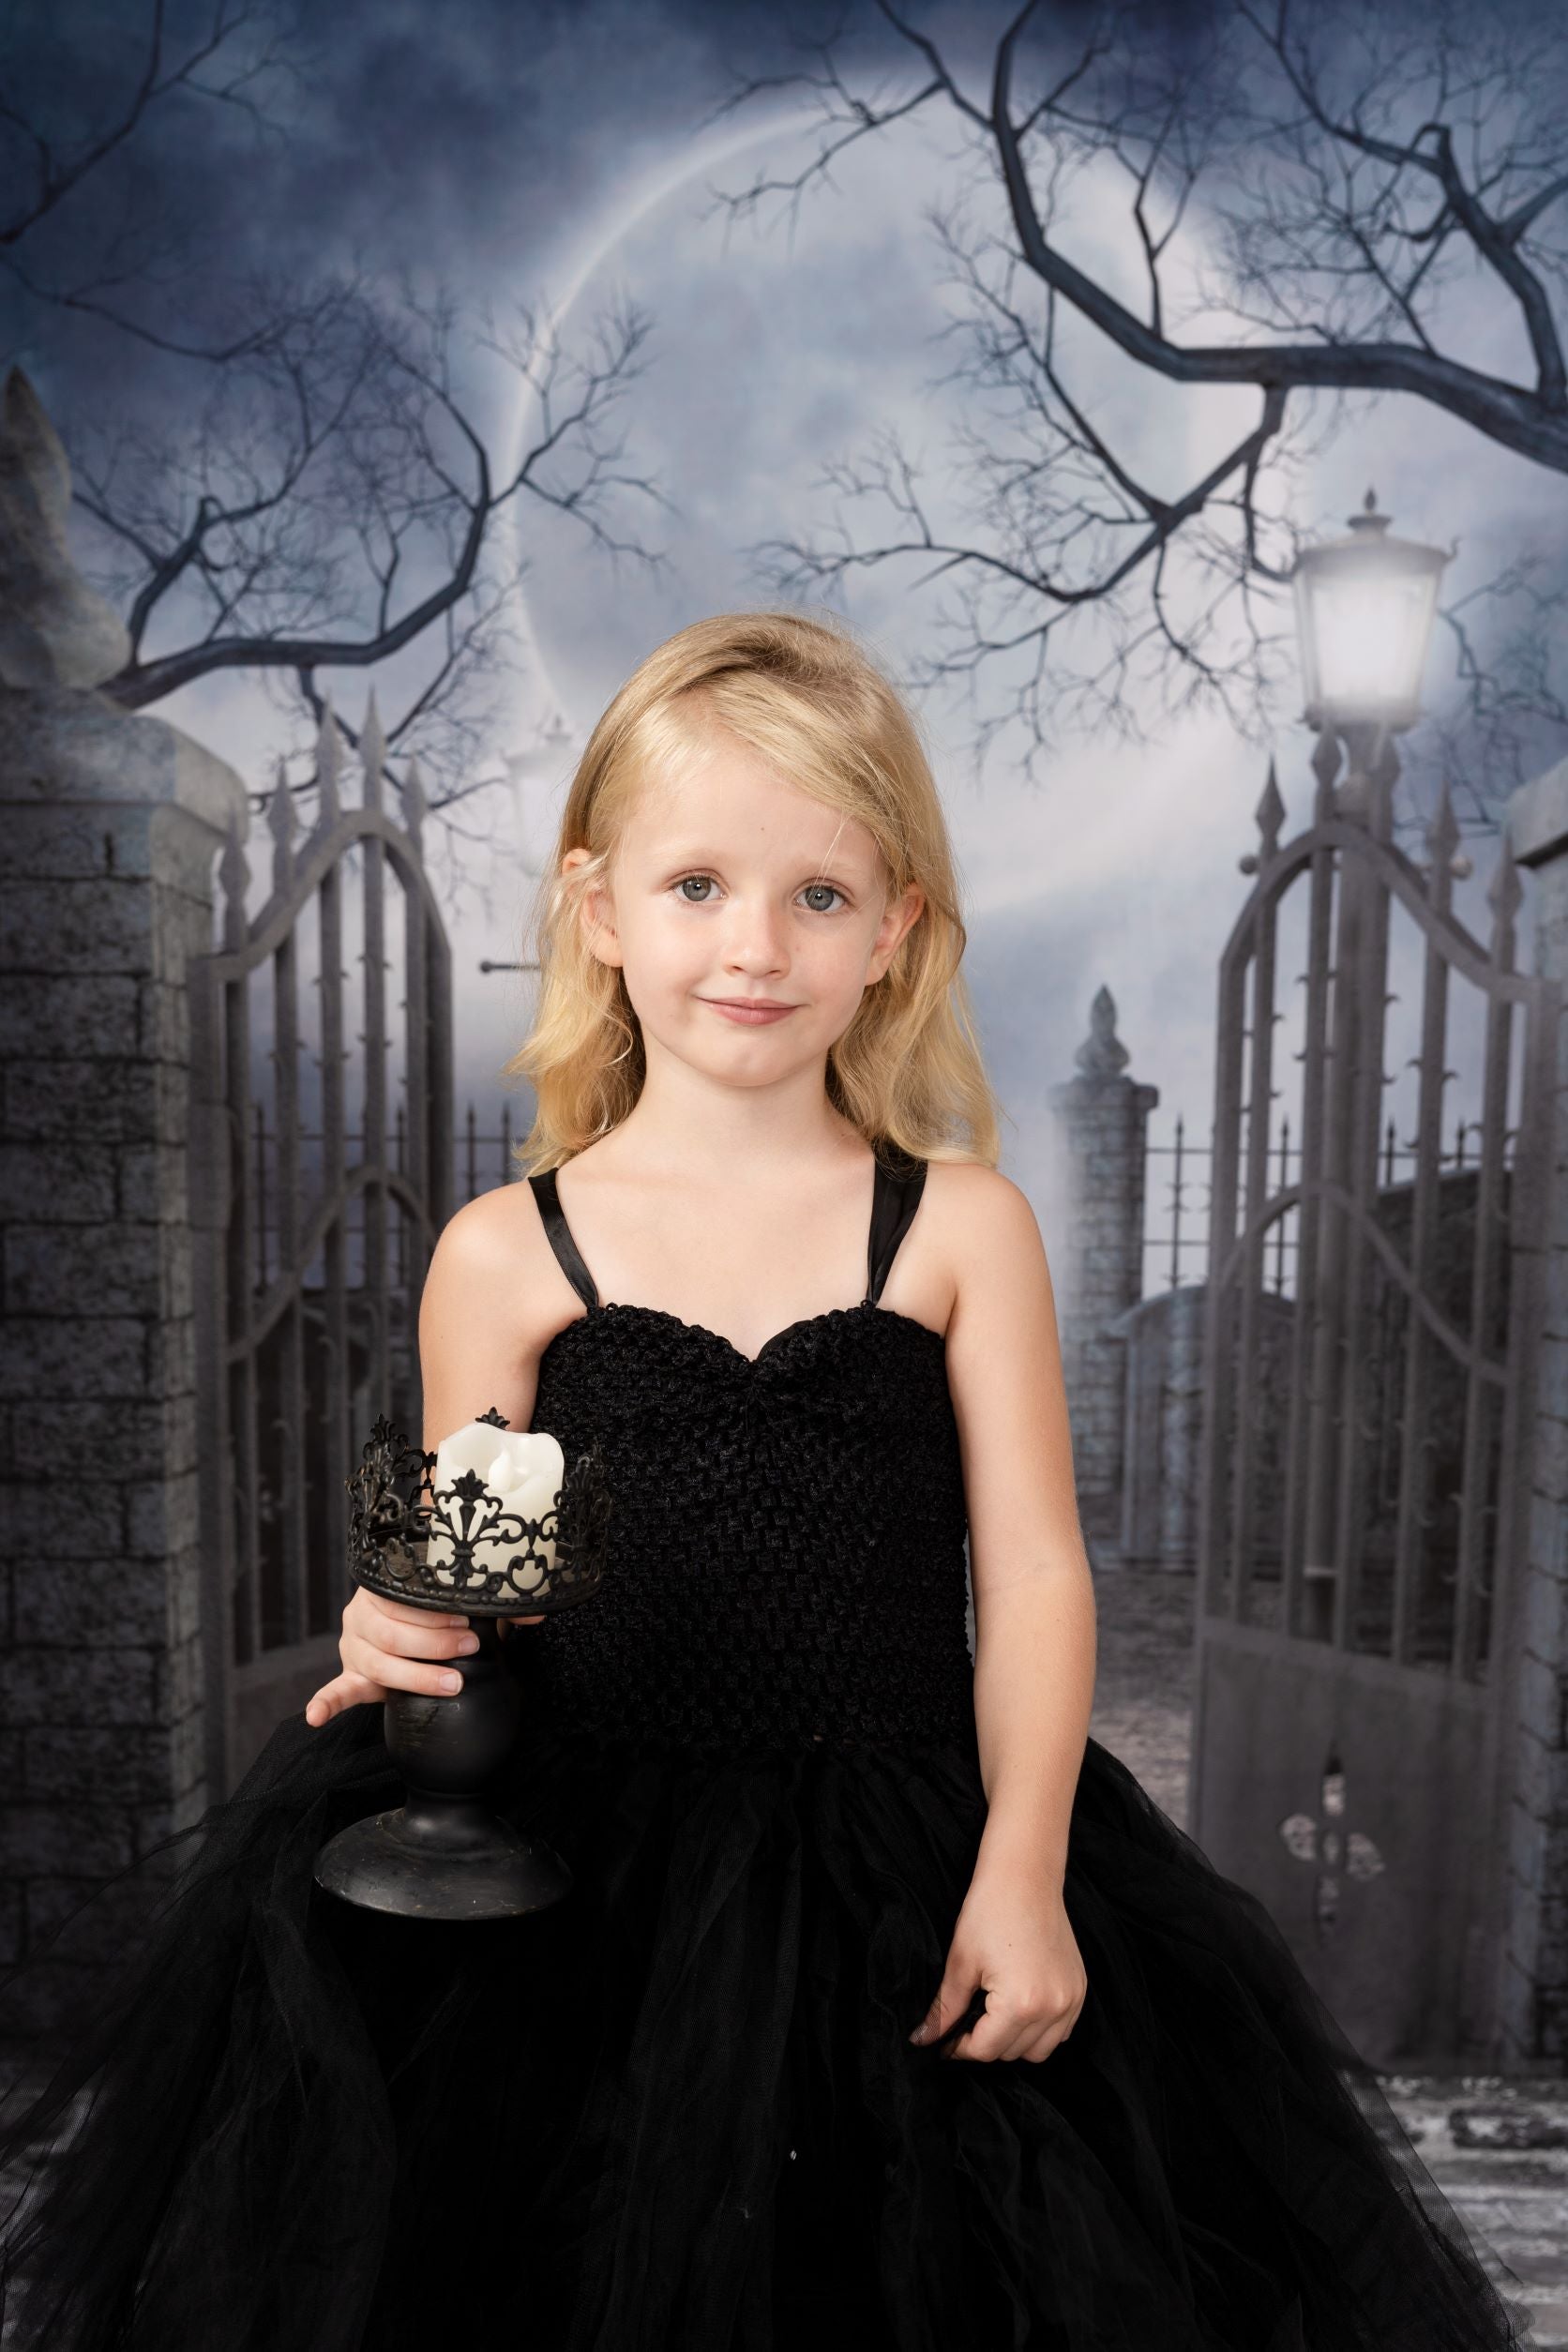 Kate Halloween fabric Backdrop for photography Haunted house - Katebackdrop